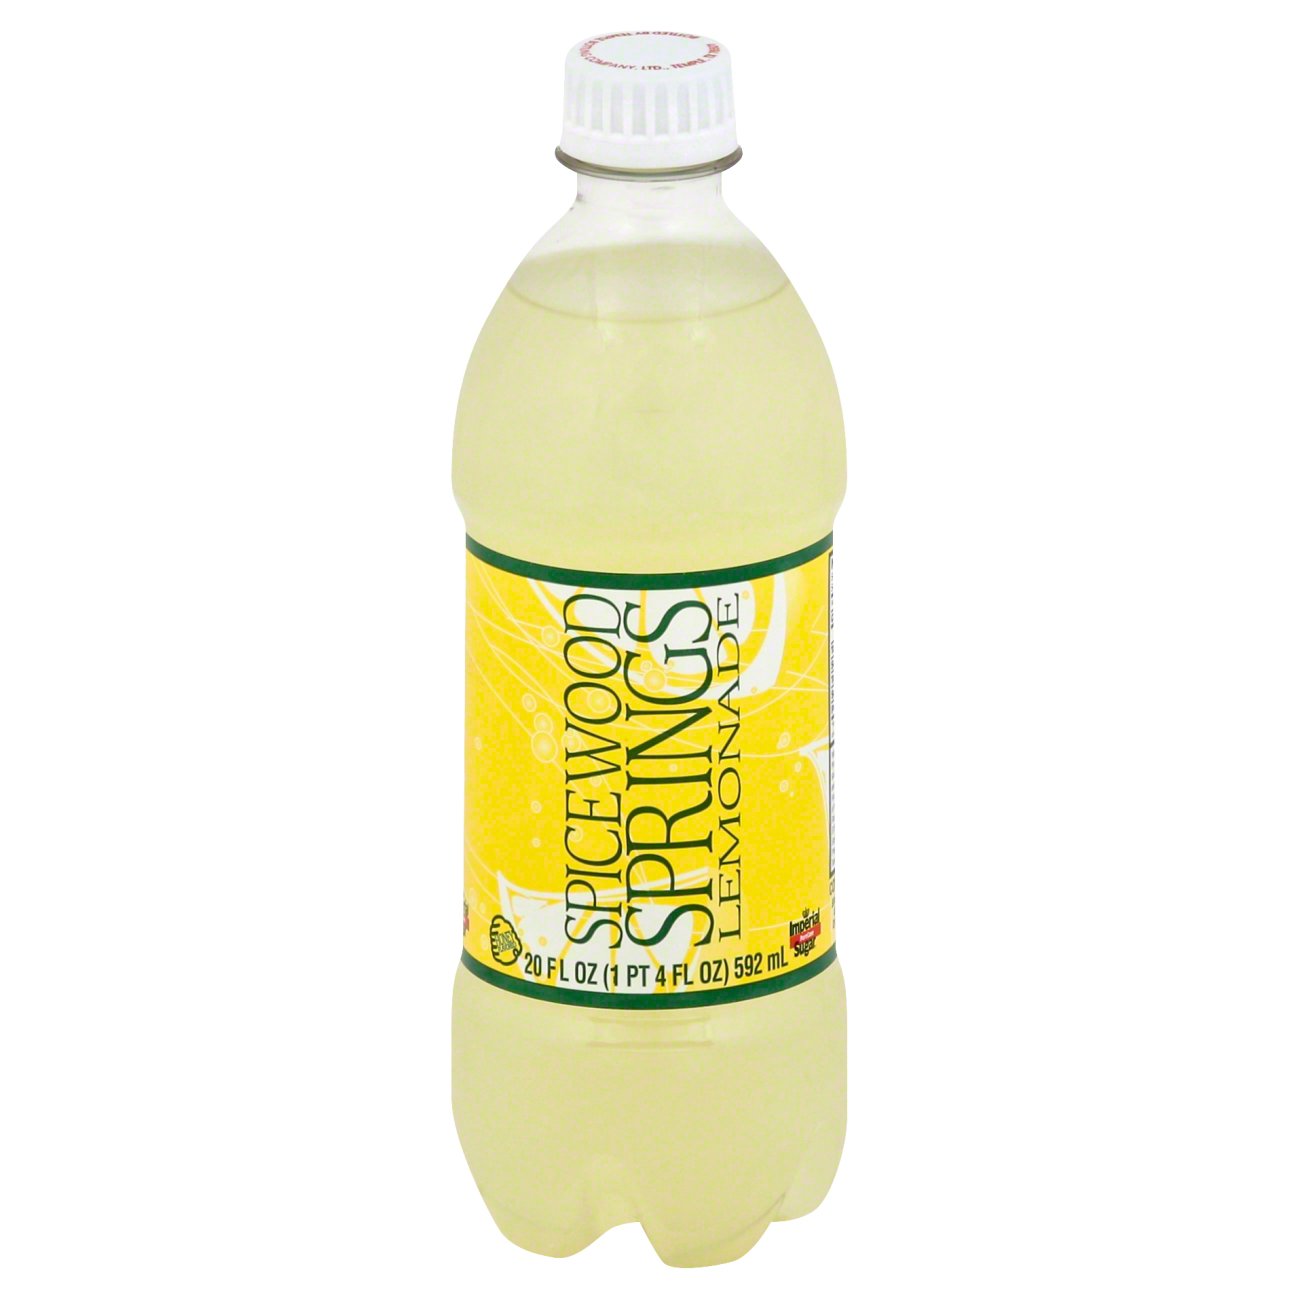 Buy Lemon Juice Bottles  Dressing Bottles – Spice It Your Way